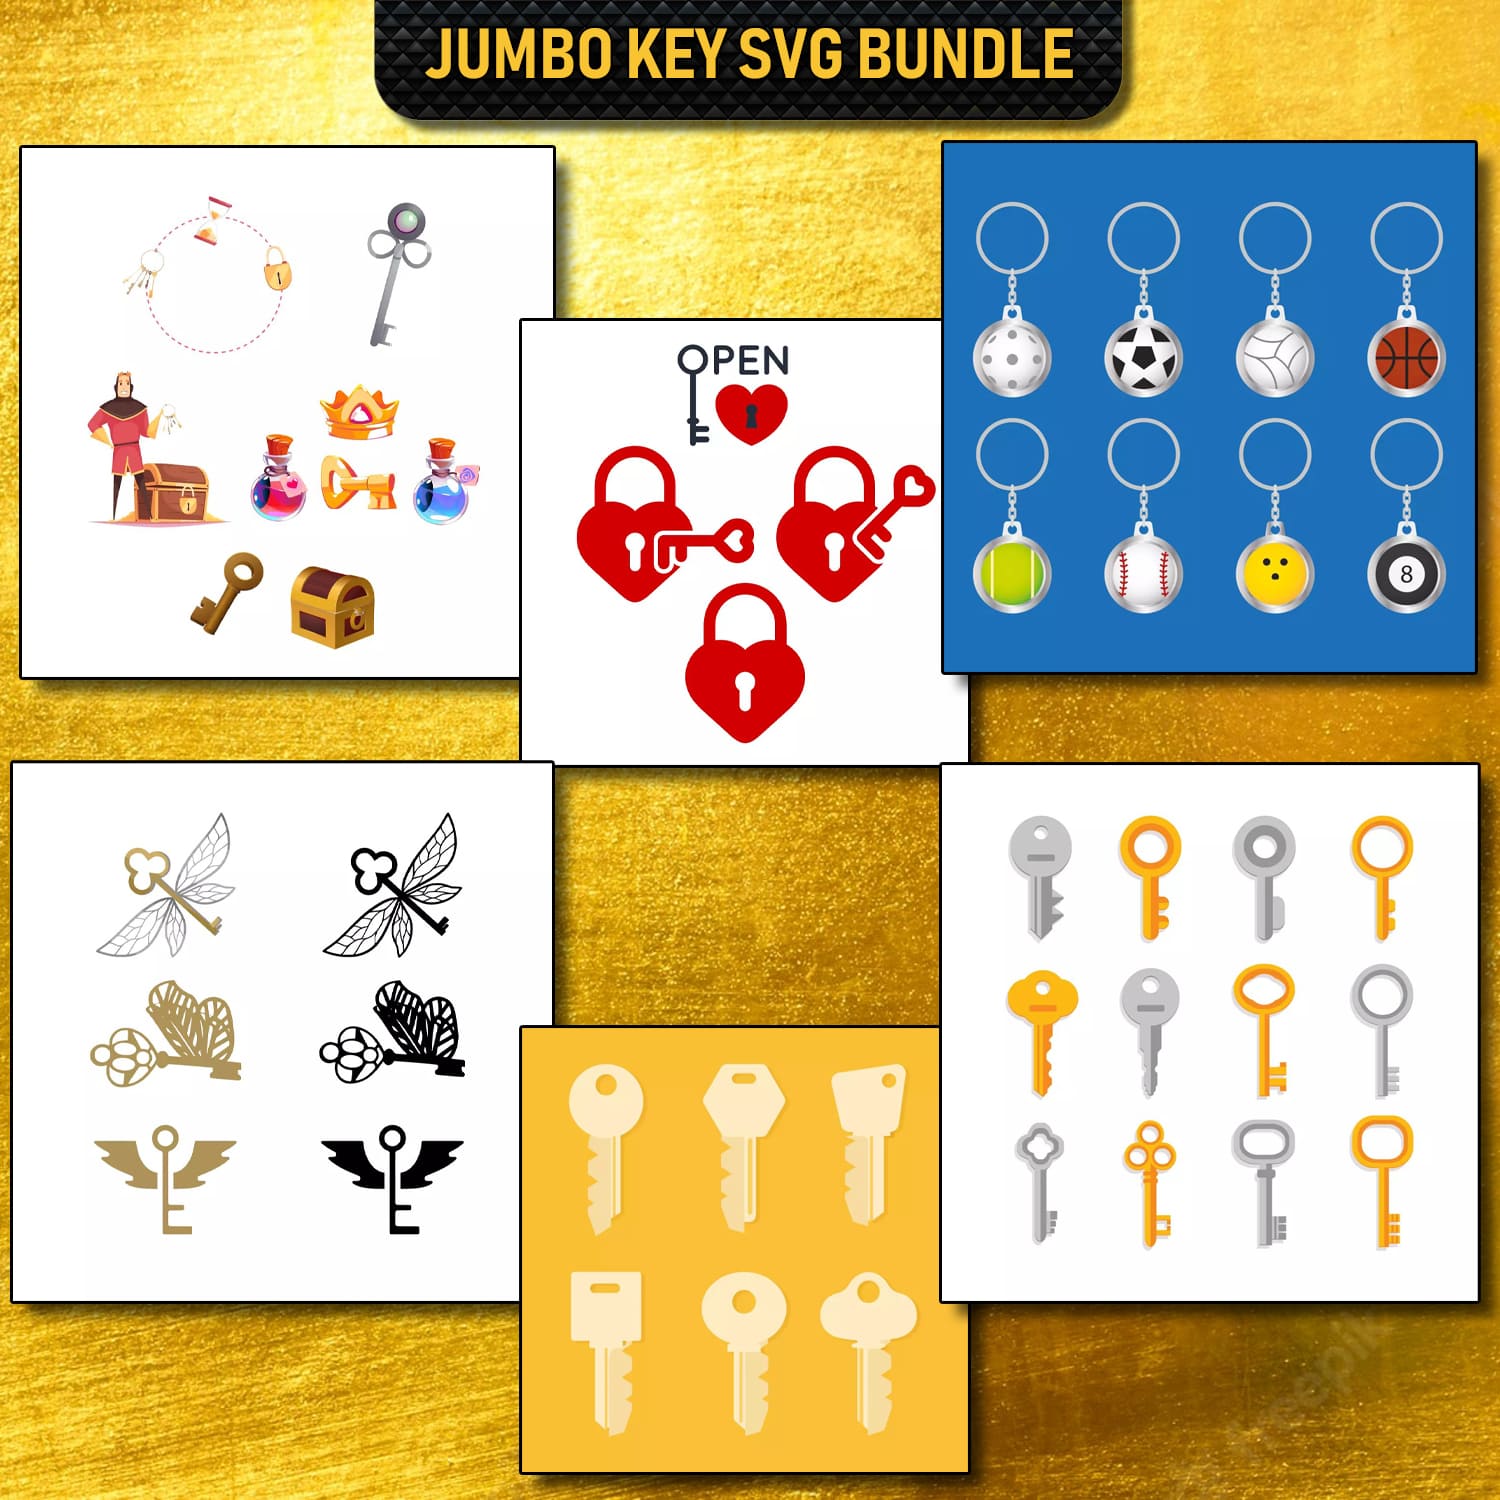 Jumbo Key SVG Bundle cover image.